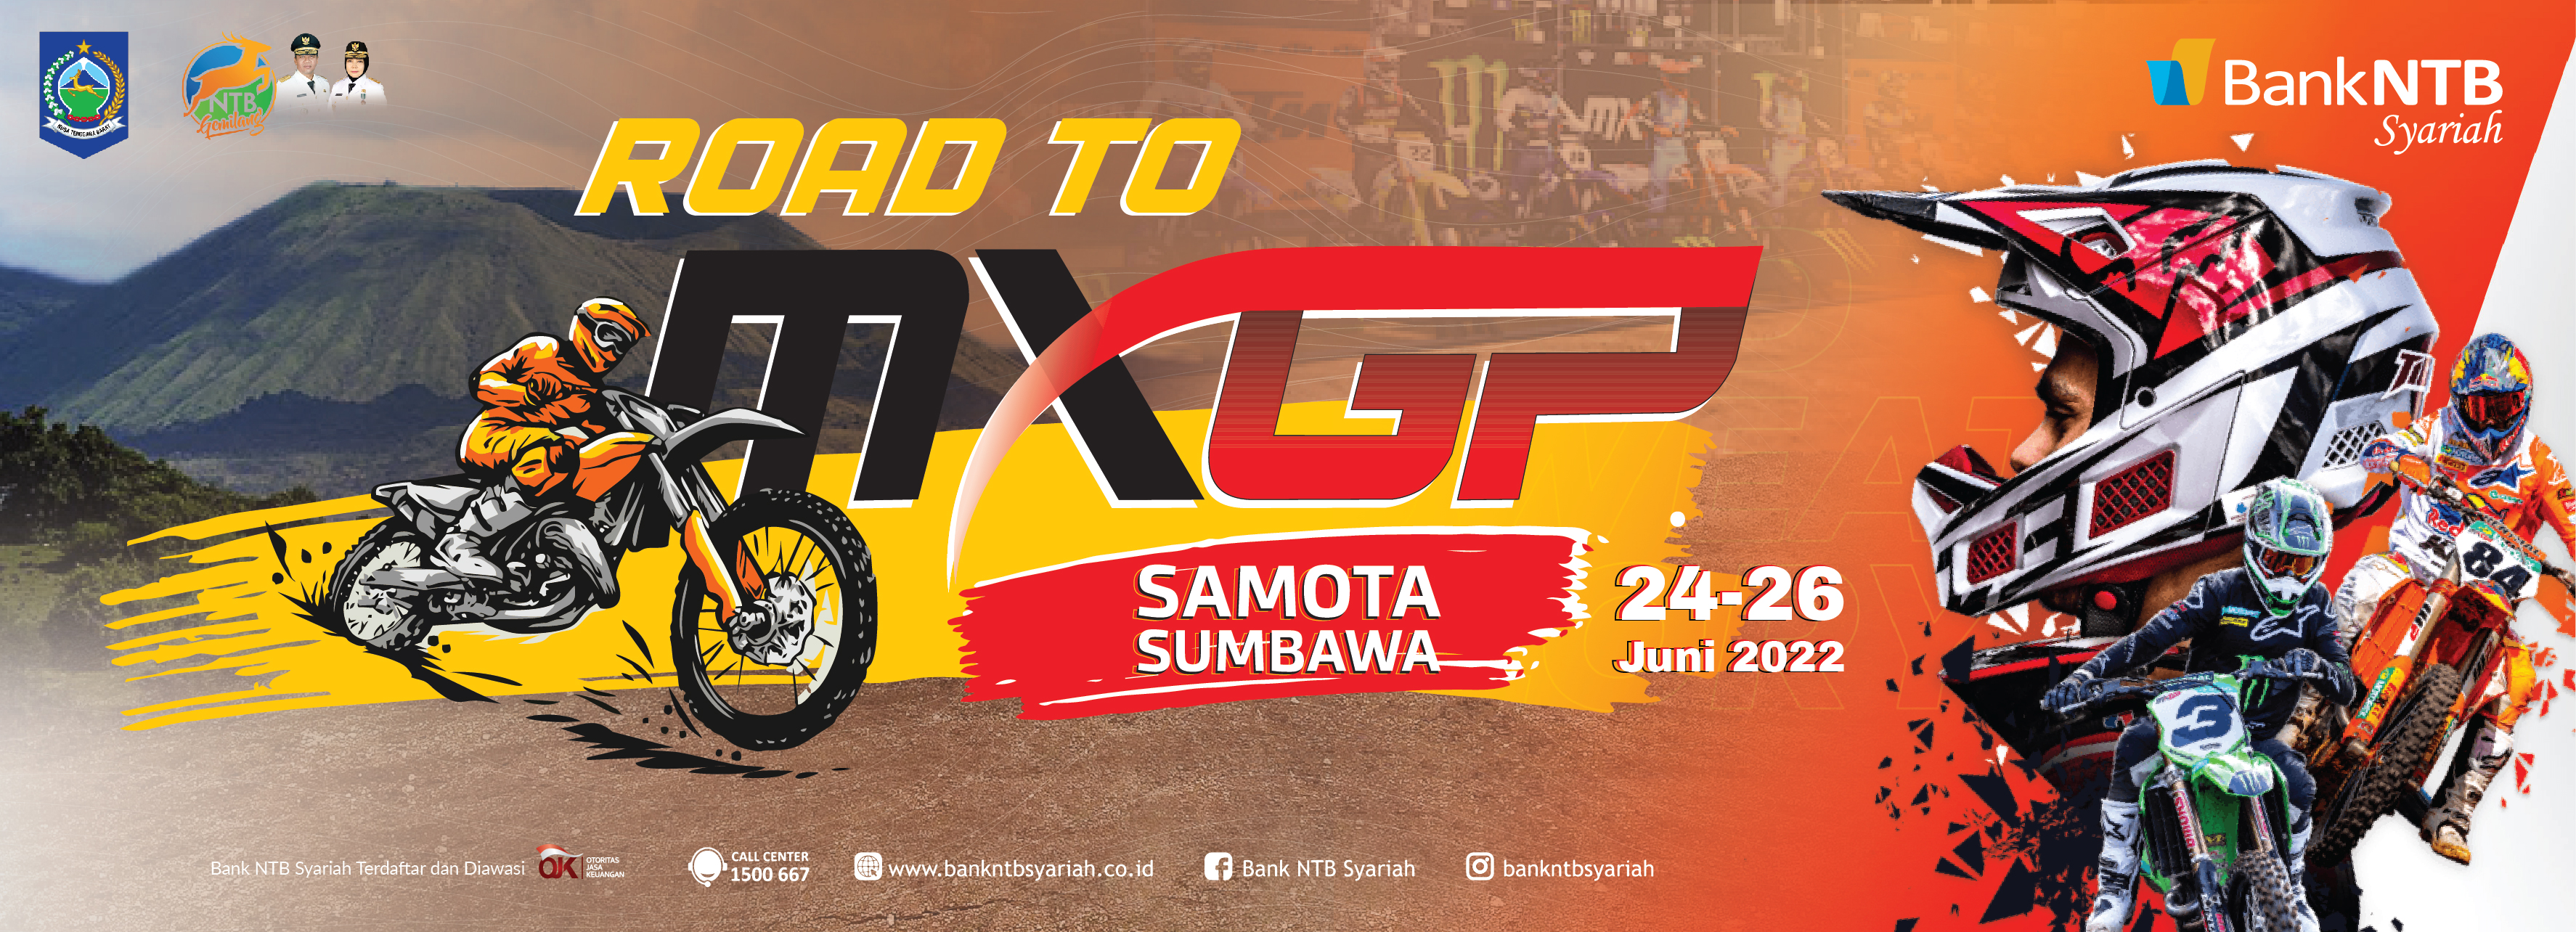 Road to Motocross Grand Prix 2022 Samota - Sumbawa